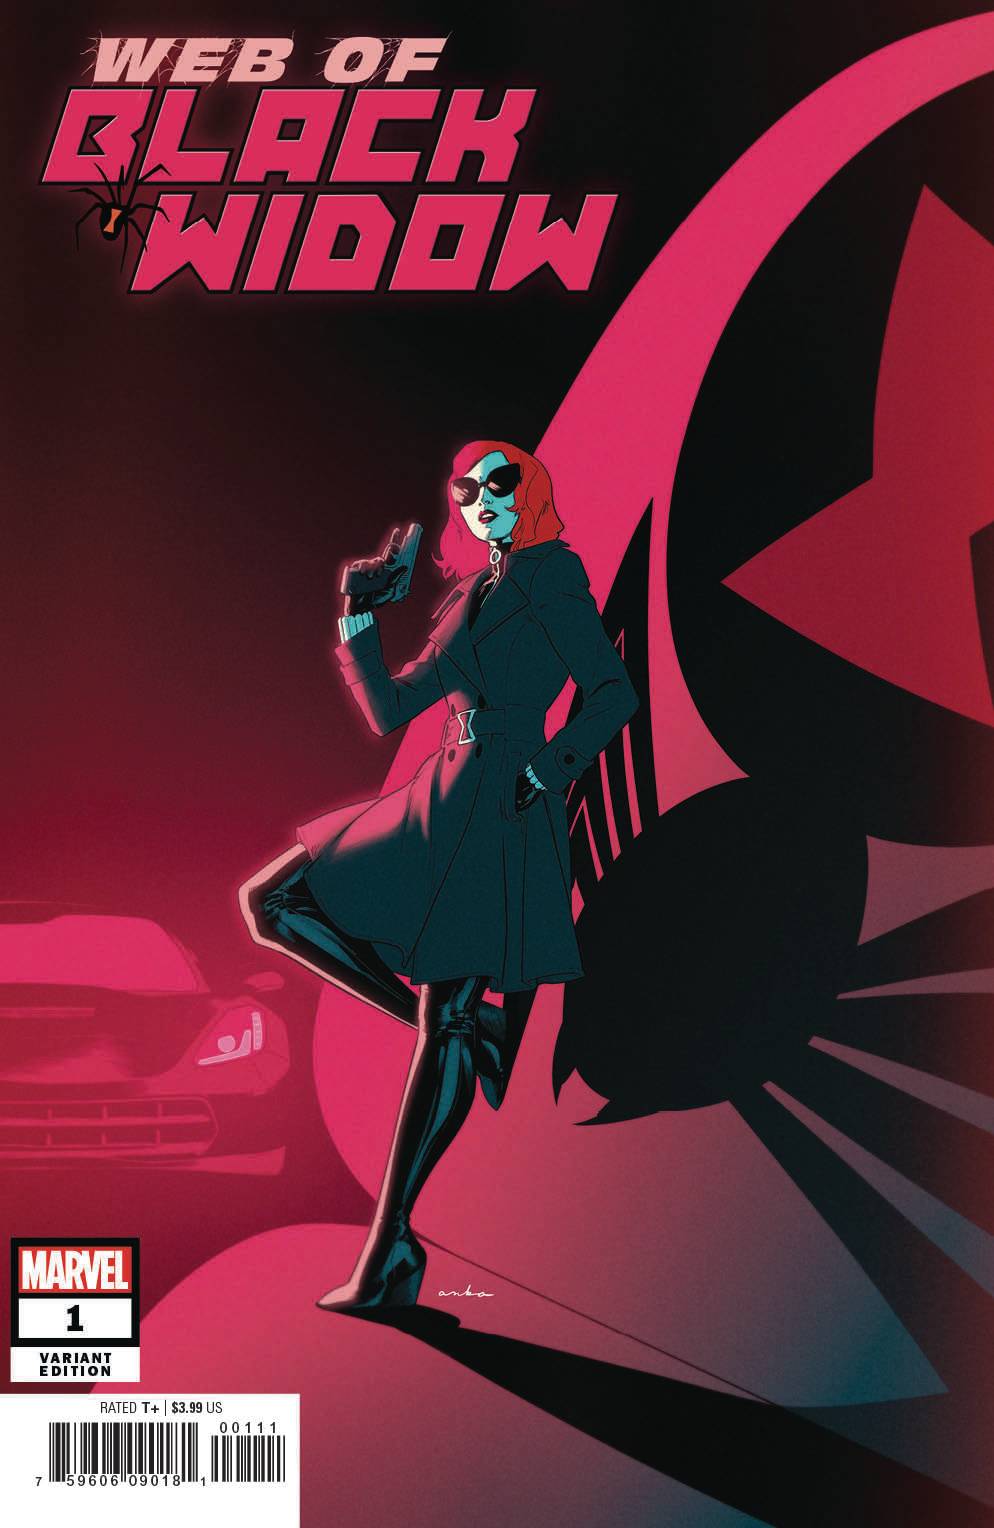 Web of Black Widow 1 Var C Comic Book NM